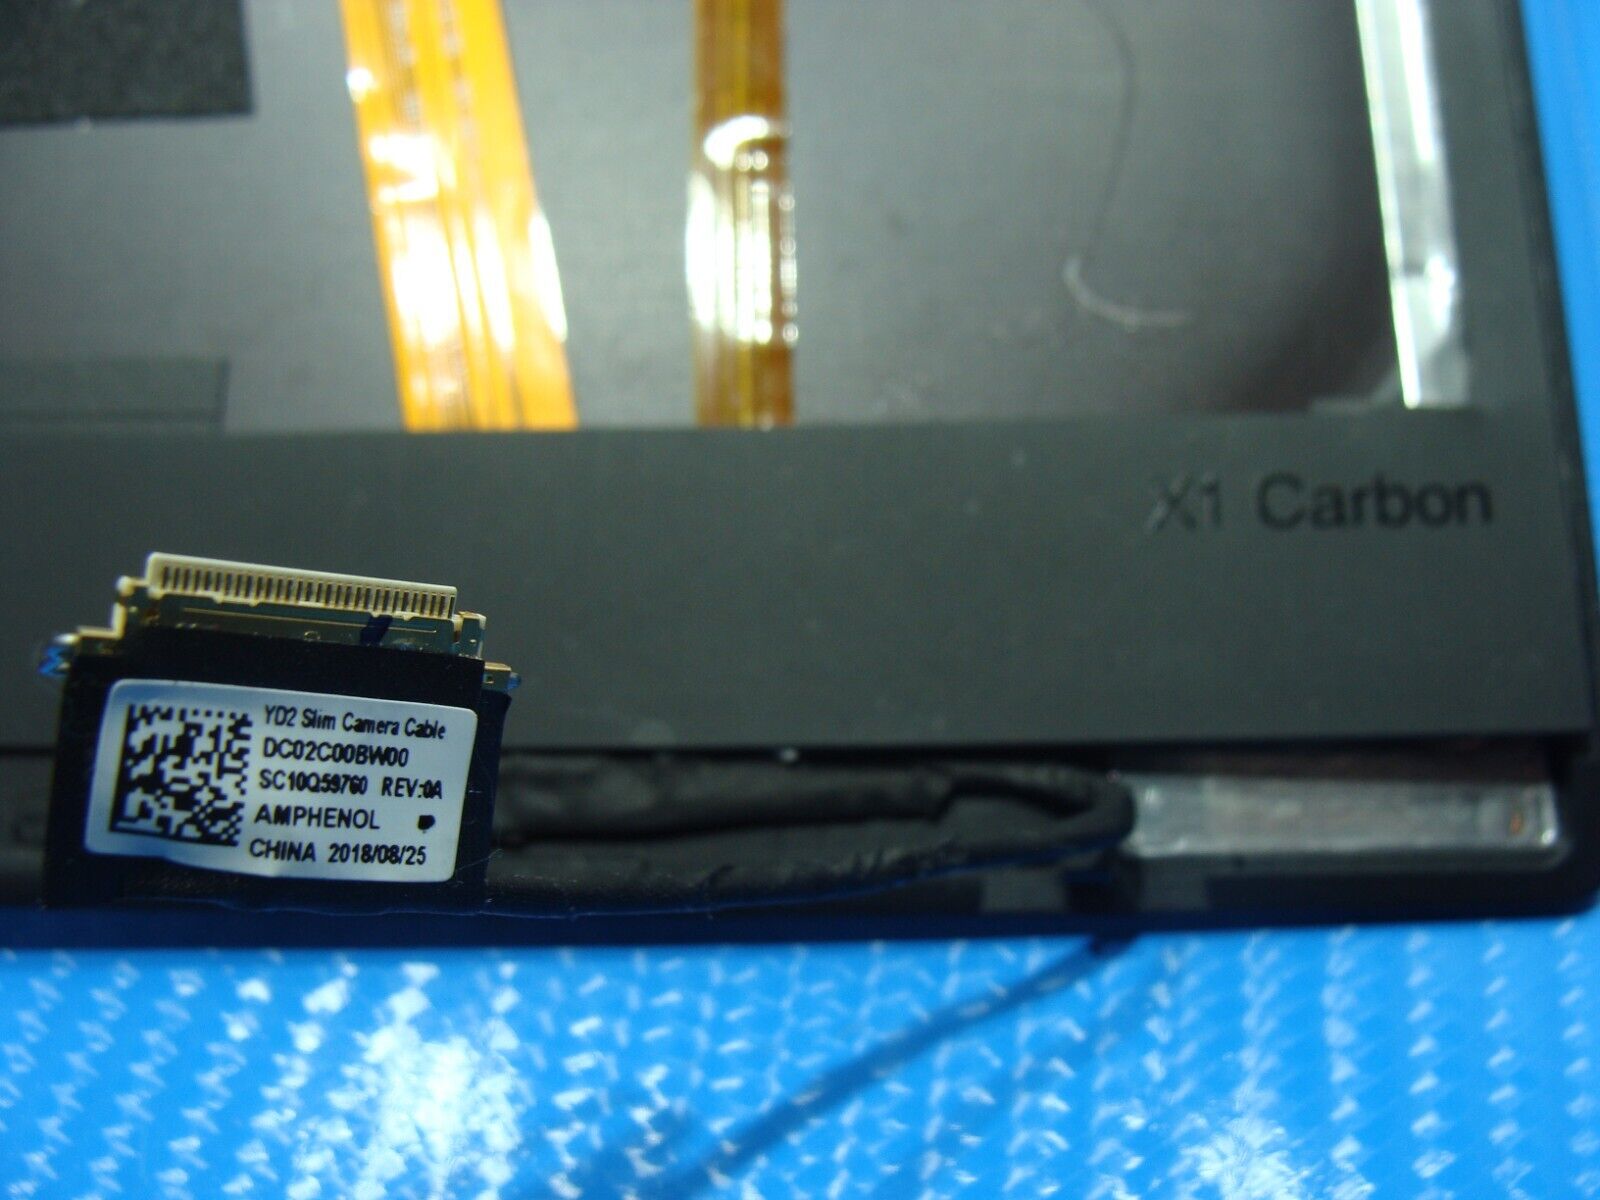 Lenovo ThinkPad 14” X1 Carbon 6th Gen LCD Back Cover w/Front Bezel AQ16R000100